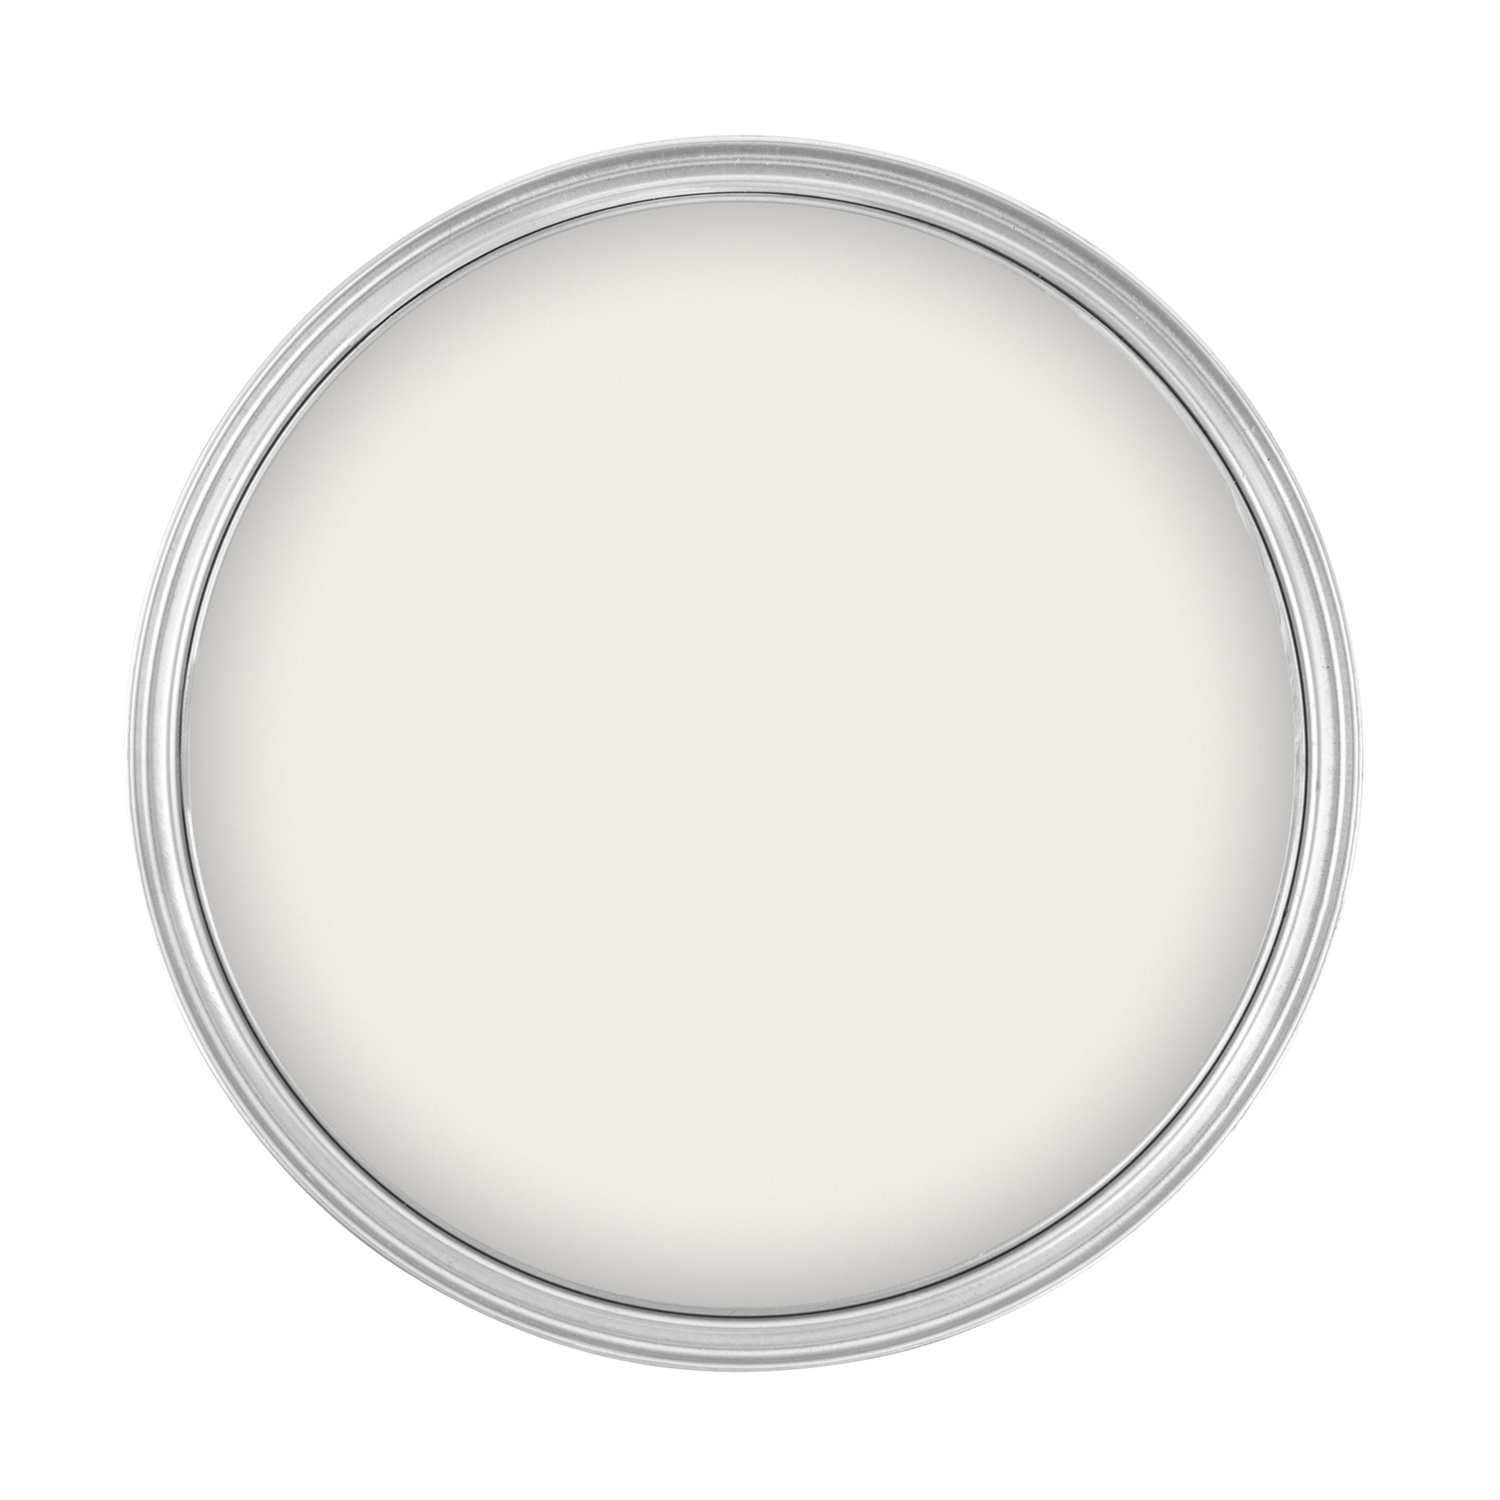 Dulux Walls and Ceilings Pure Bright White Matt Emulsion Paint 2.5L Image